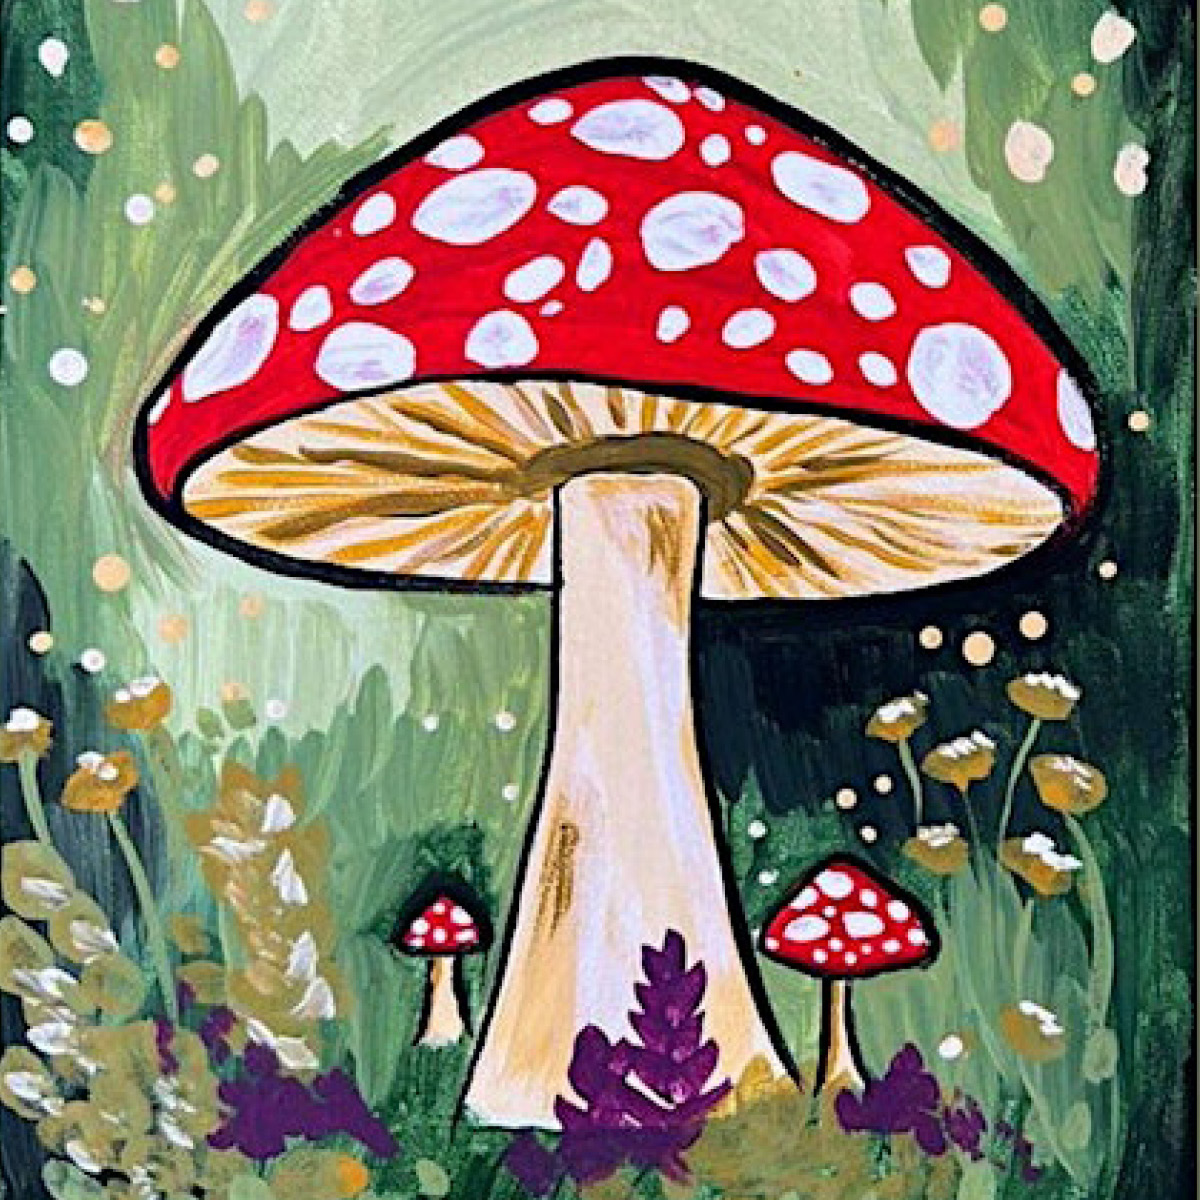 Moonlit mushrooms